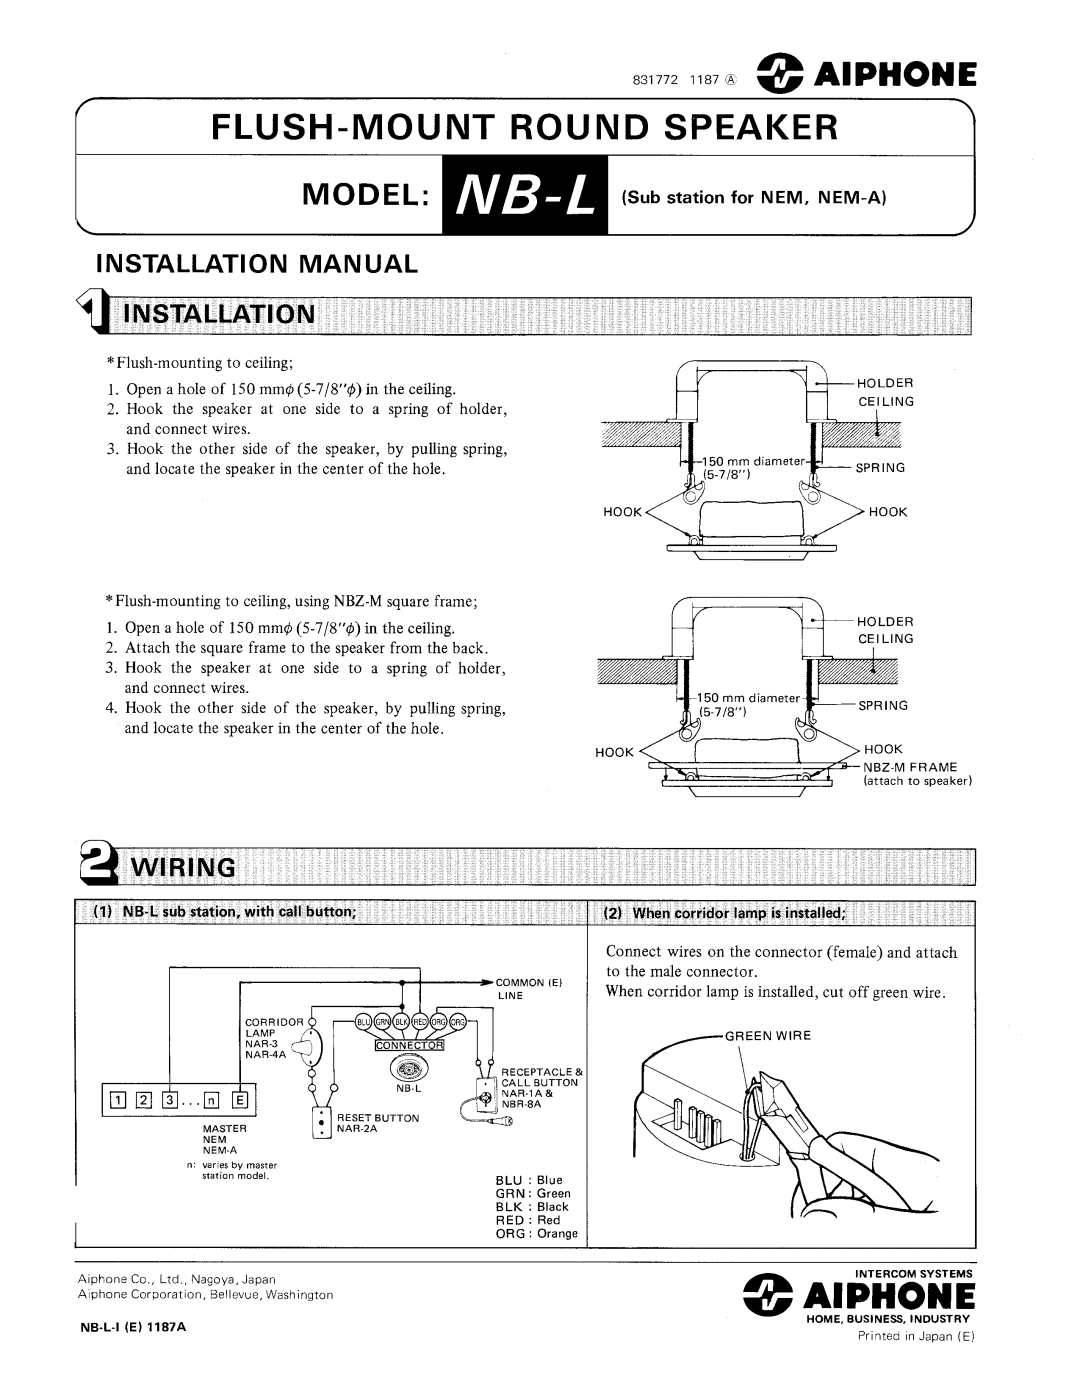 Aiphone NB-L manual 